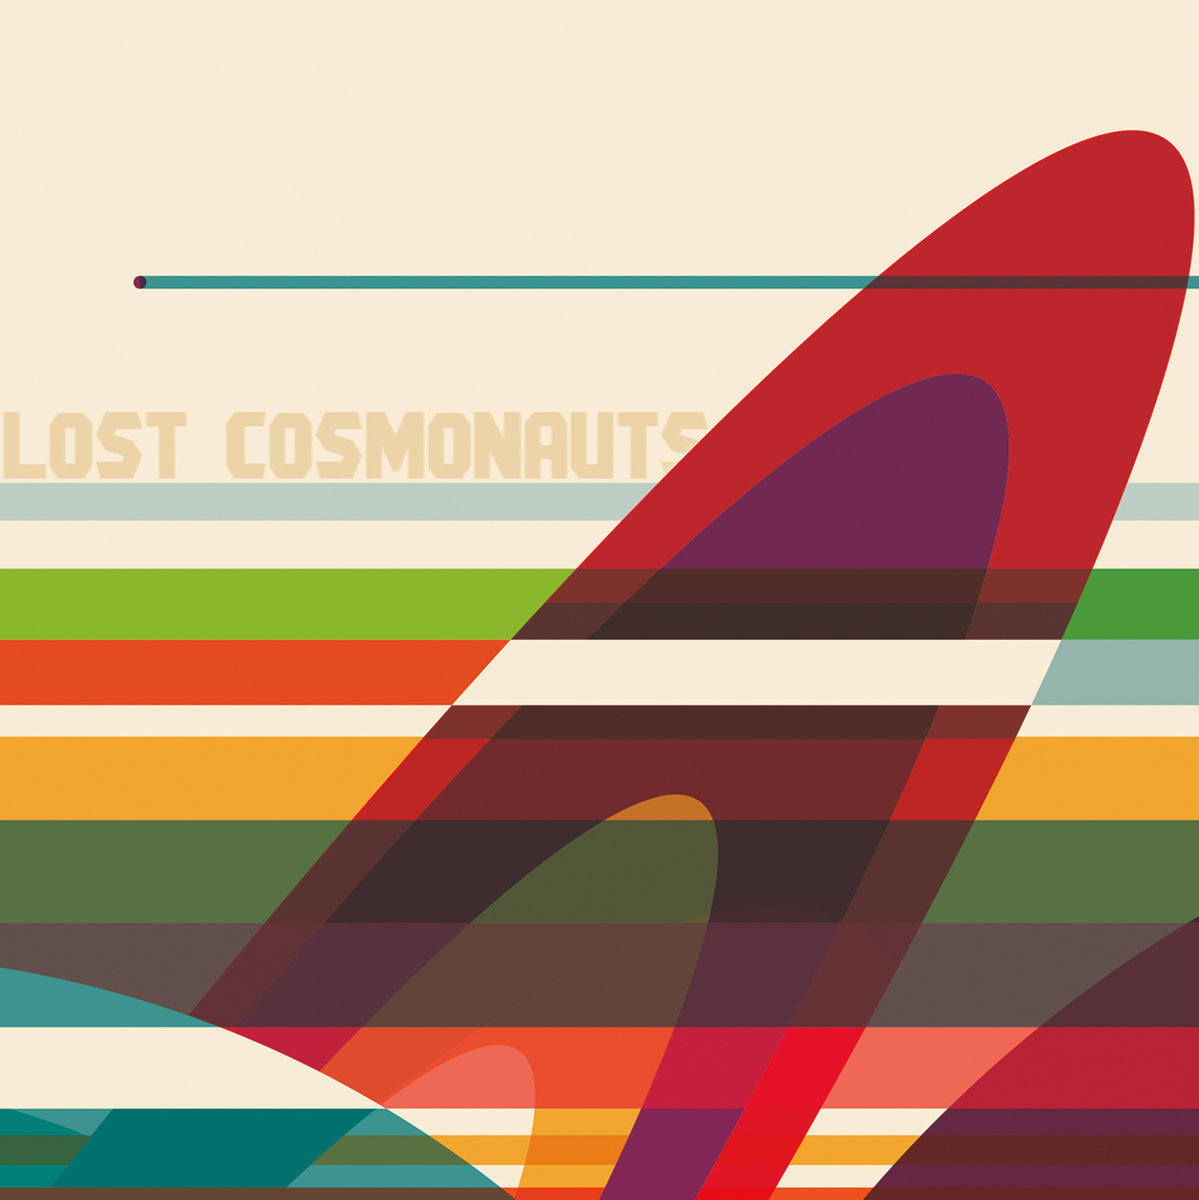  Lost Cosmonauts – Lost Cosmonauts